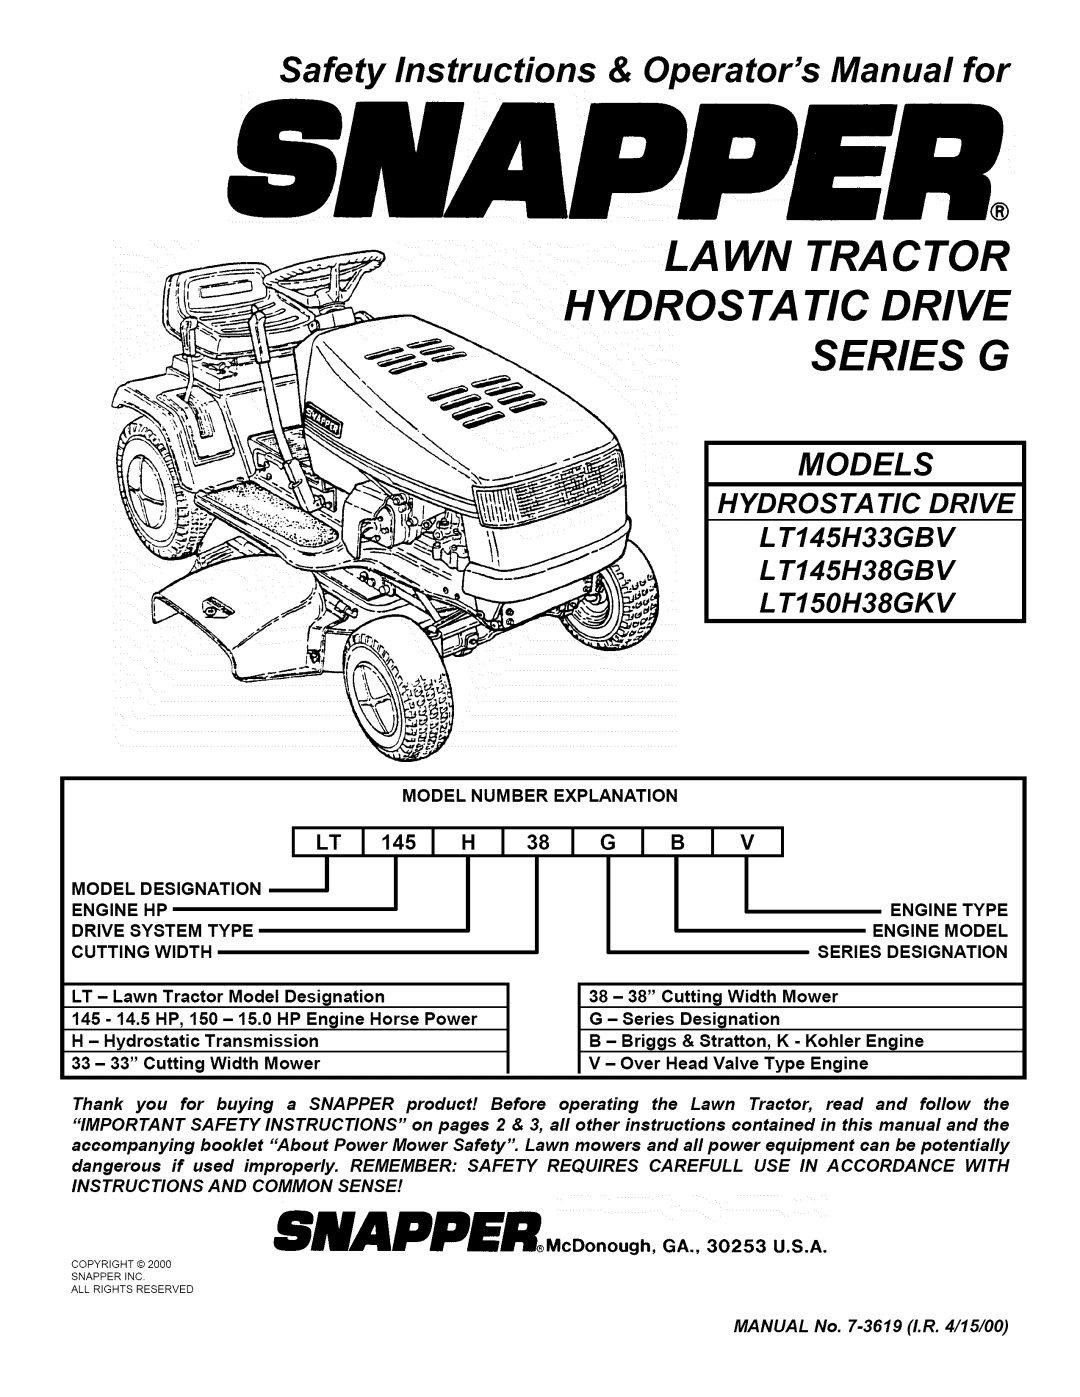 Snapper L T150H38GKV, L T145H33GBV, L T145H38GBV important safety instructions SNAPPER, McDonough,GA U.S.A 